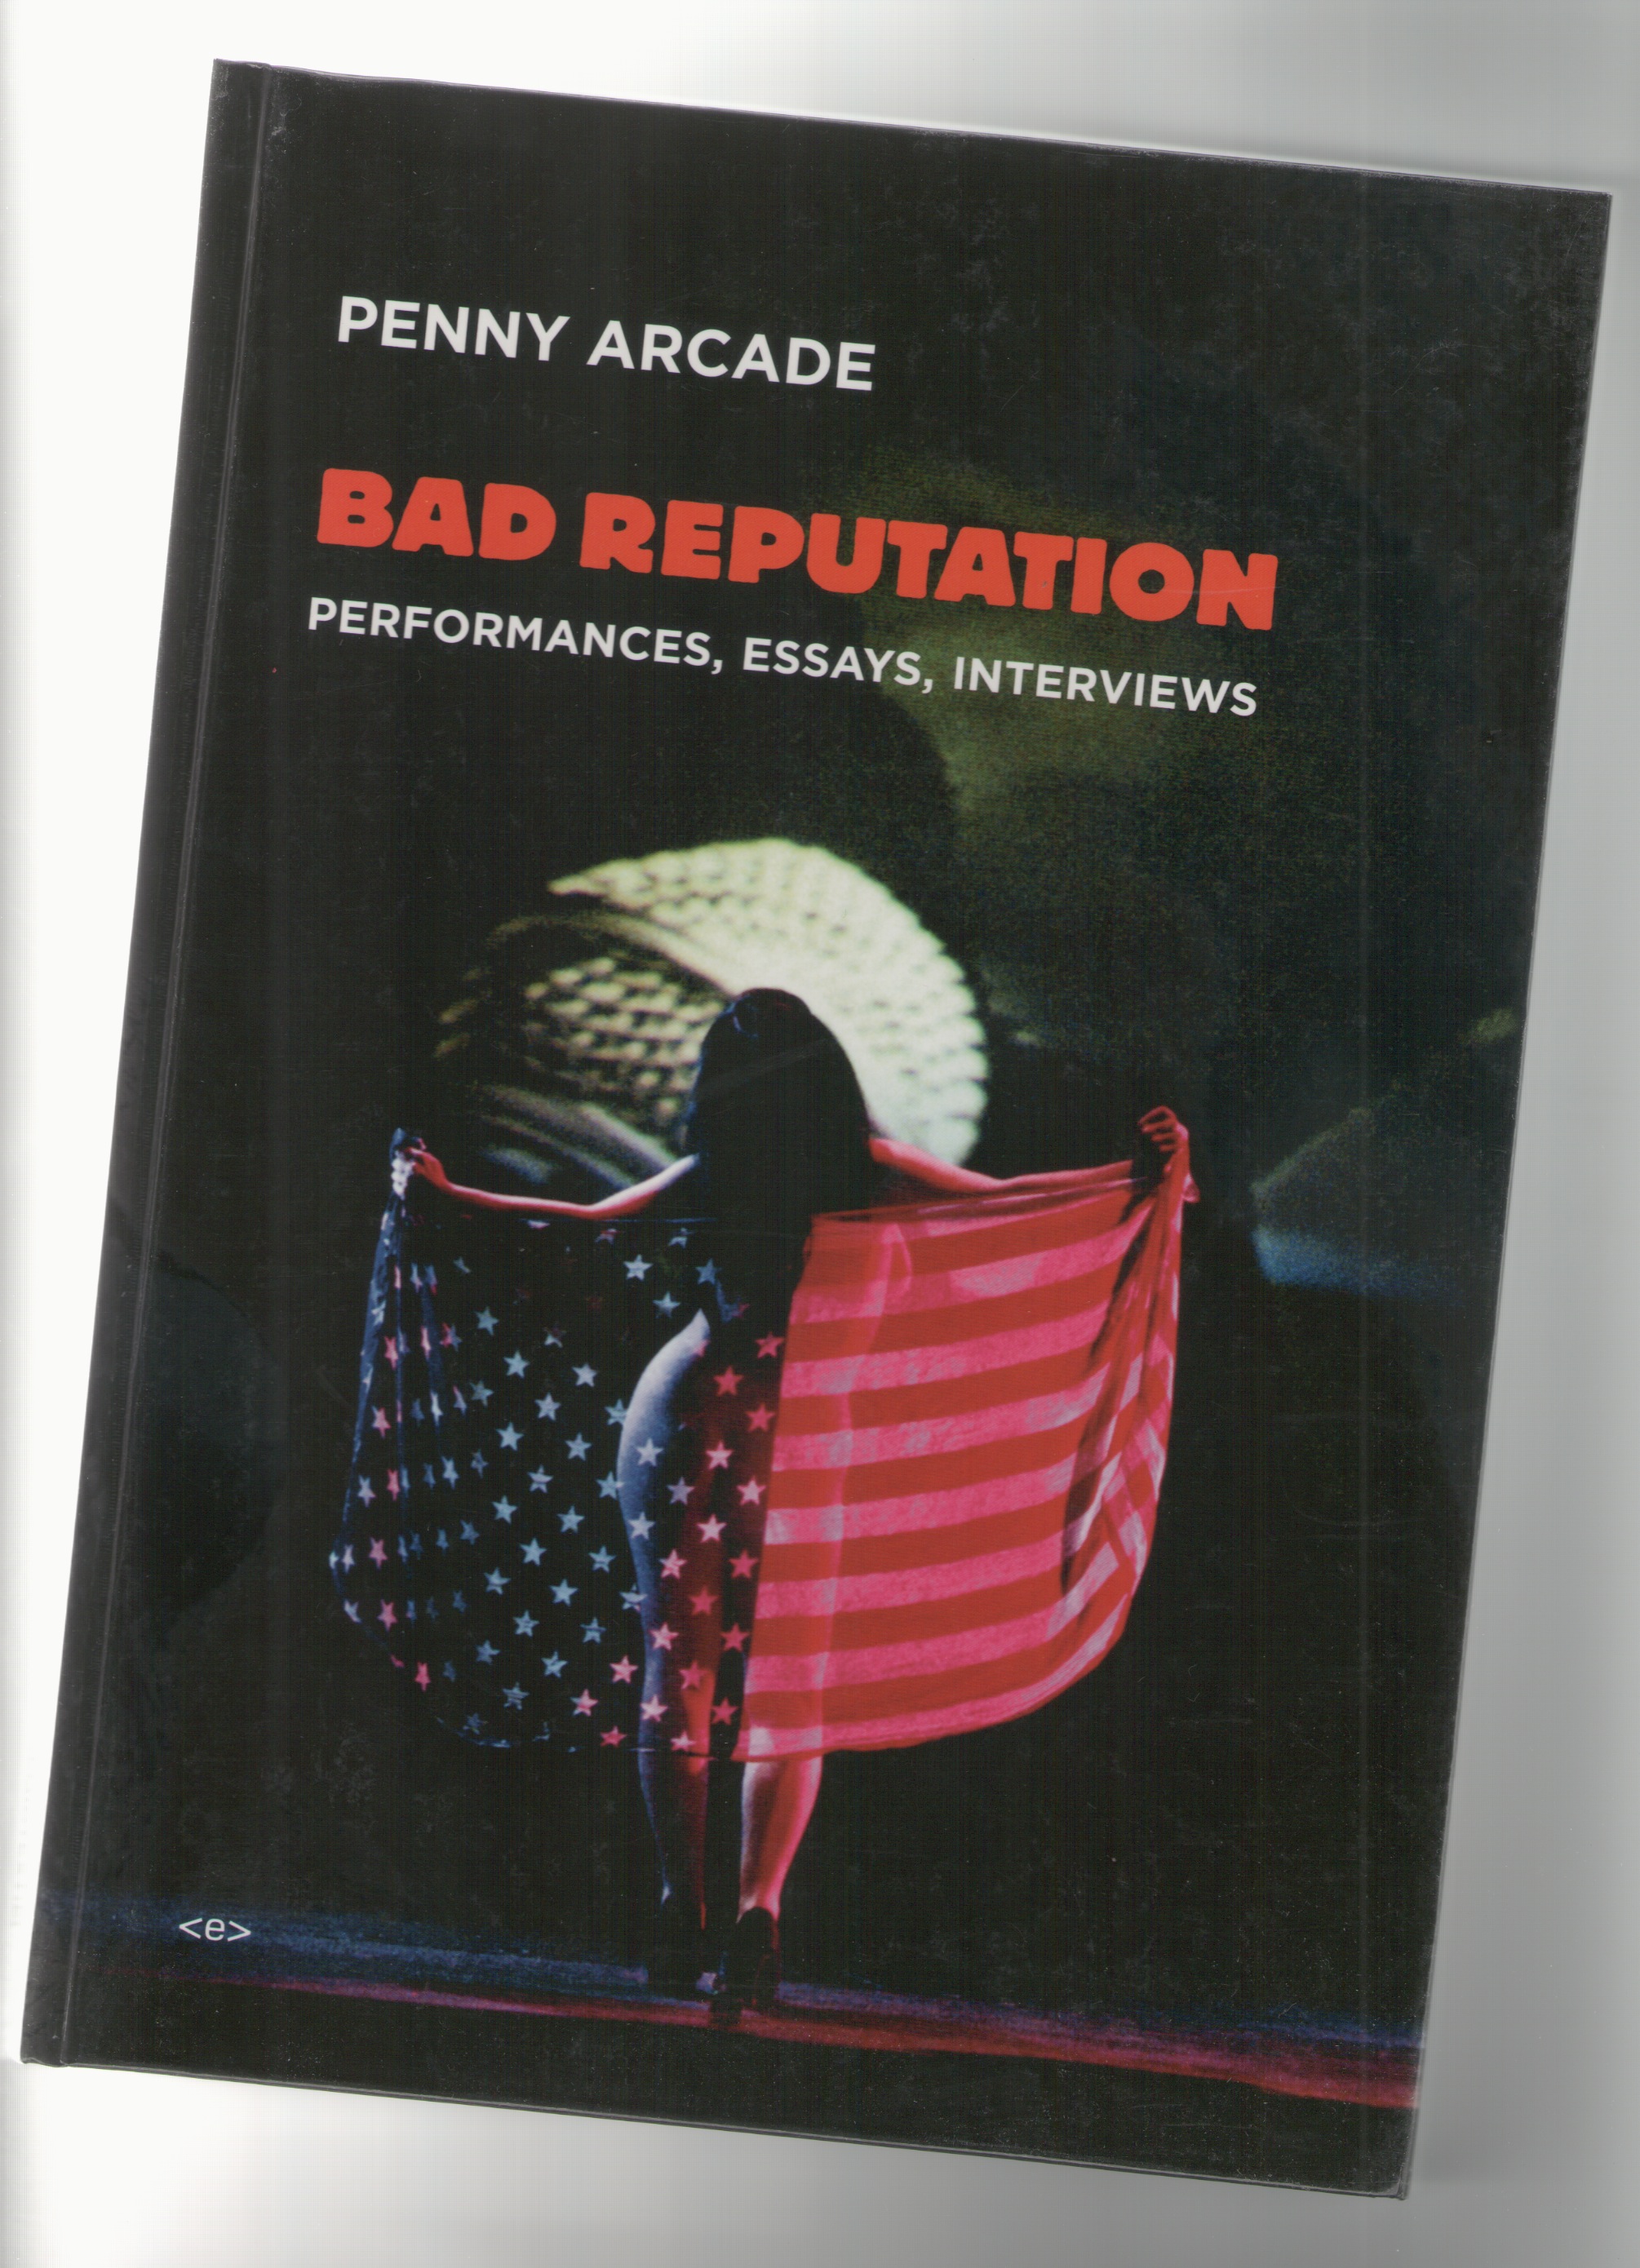 ARCADE, Penny - Bad Reputation. Performances, Essays, Interviews